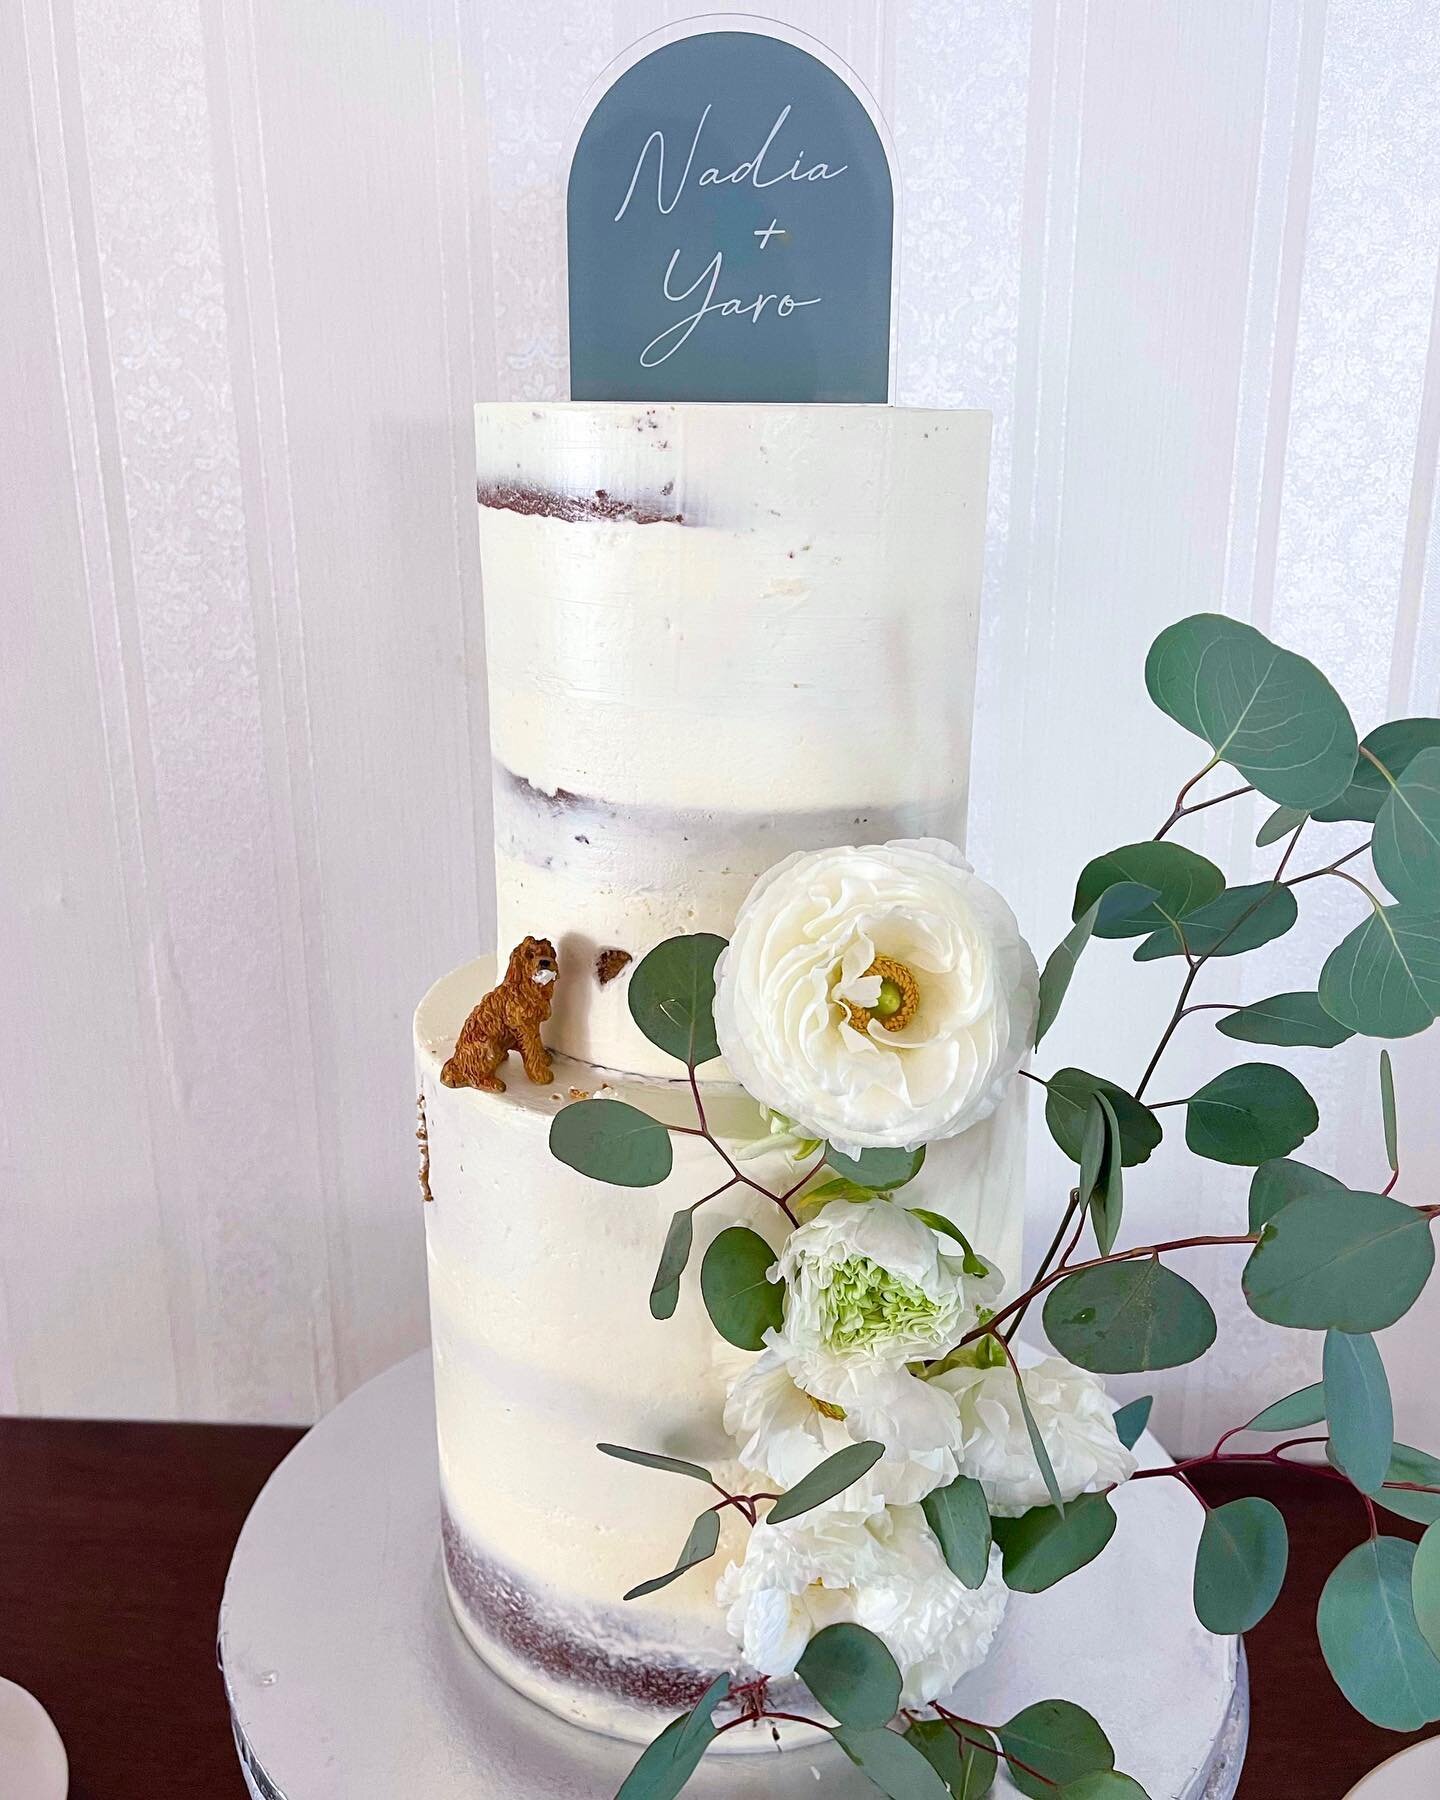 Very special wedding cake&hellip; for my middle school bestie!! Absolute favorite detail is her sweet little pup having a taste 😜💕